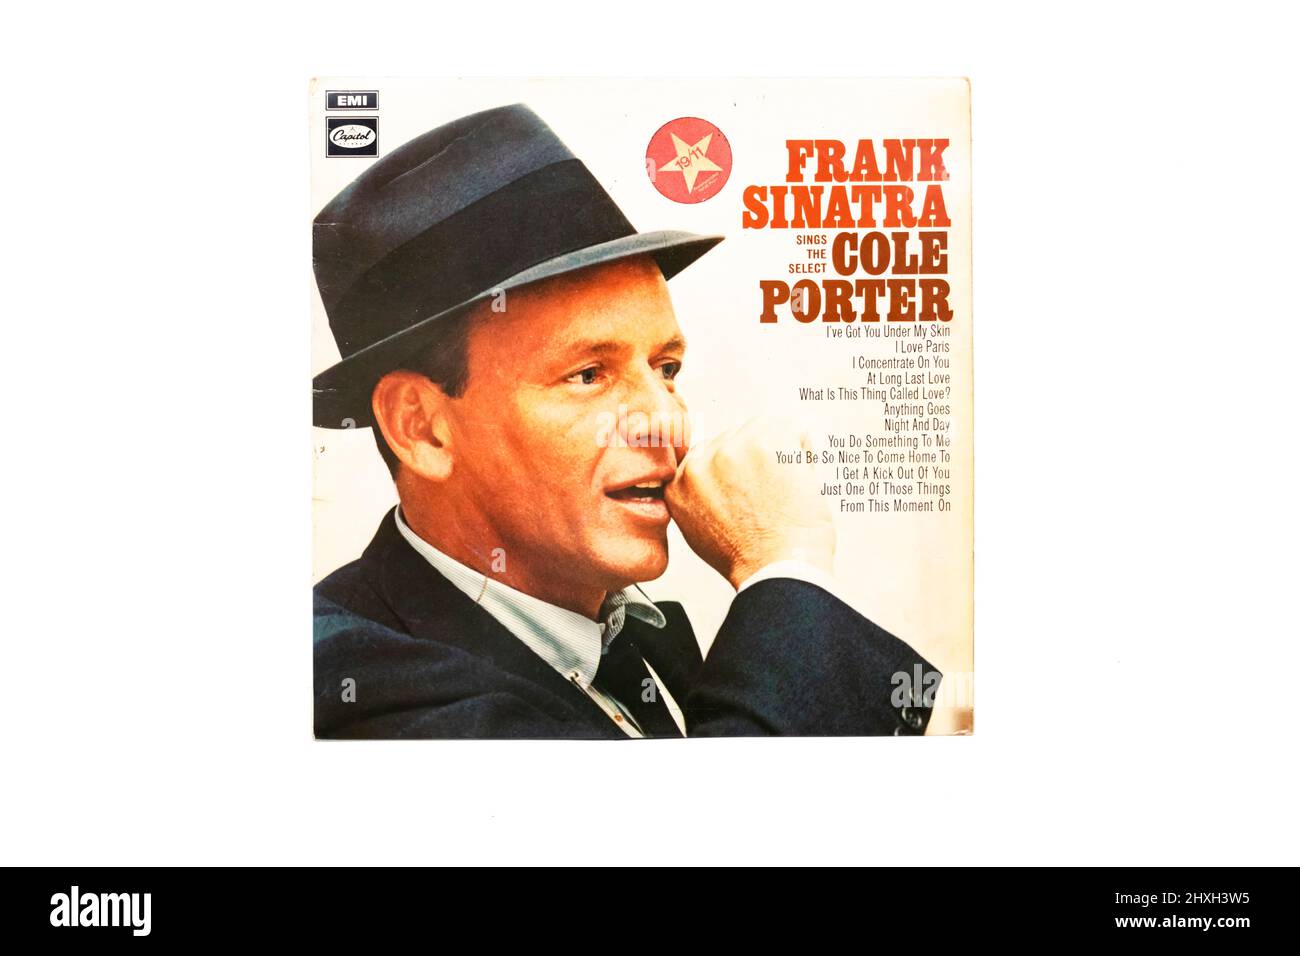 Frank Sinatra sings Cole Porter vinyl LP record cover Stock Photo